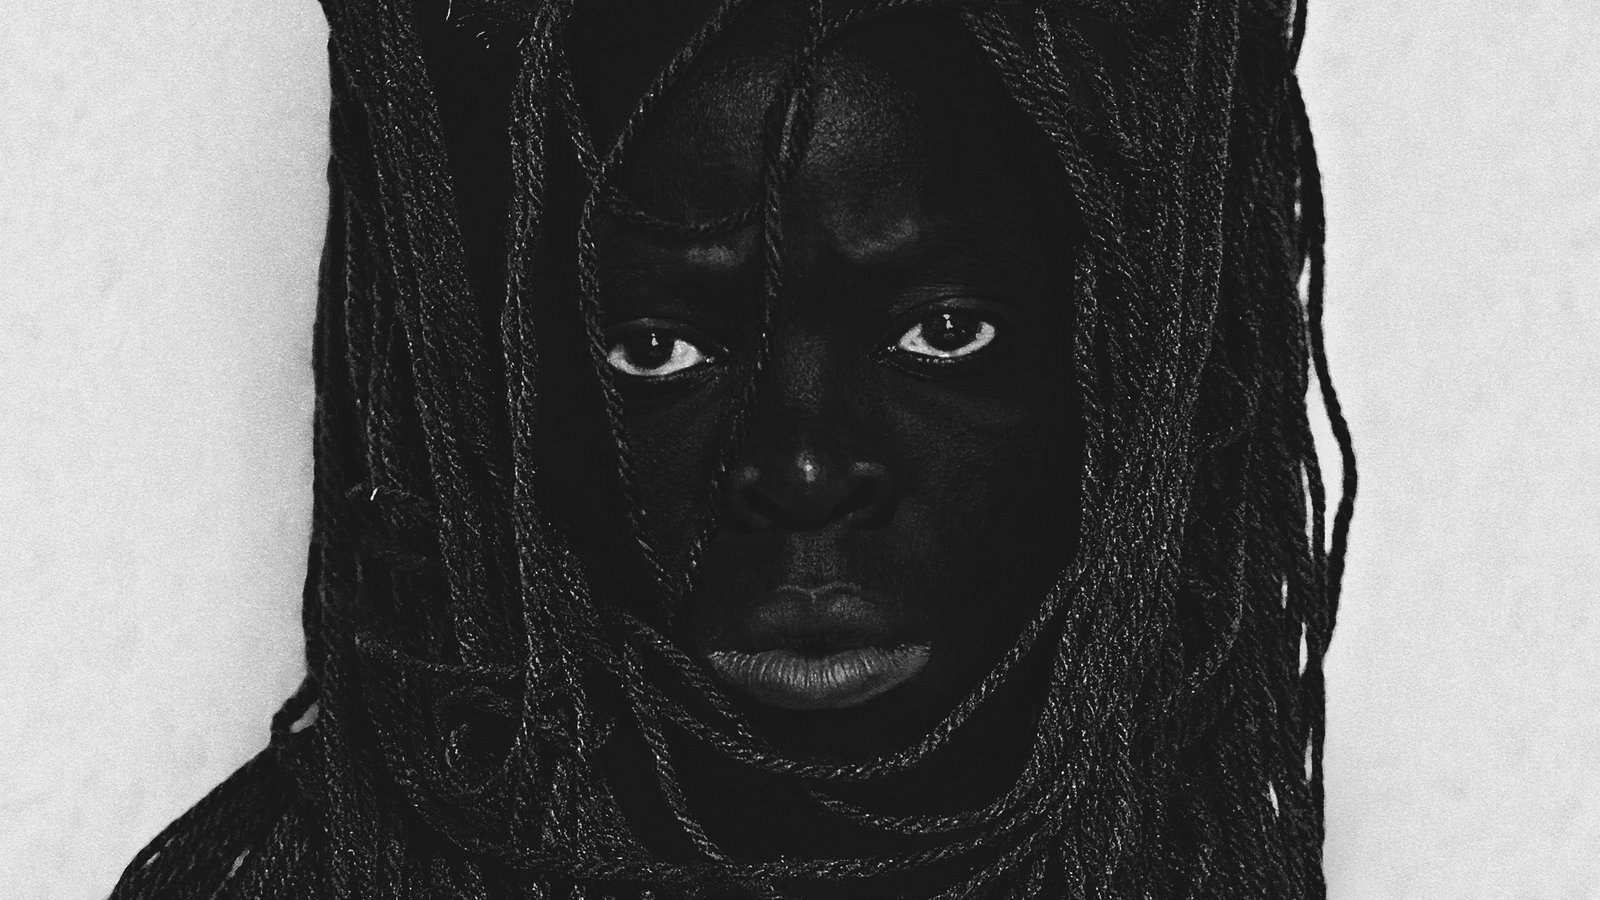 carmen rowland share super dark black girl photos